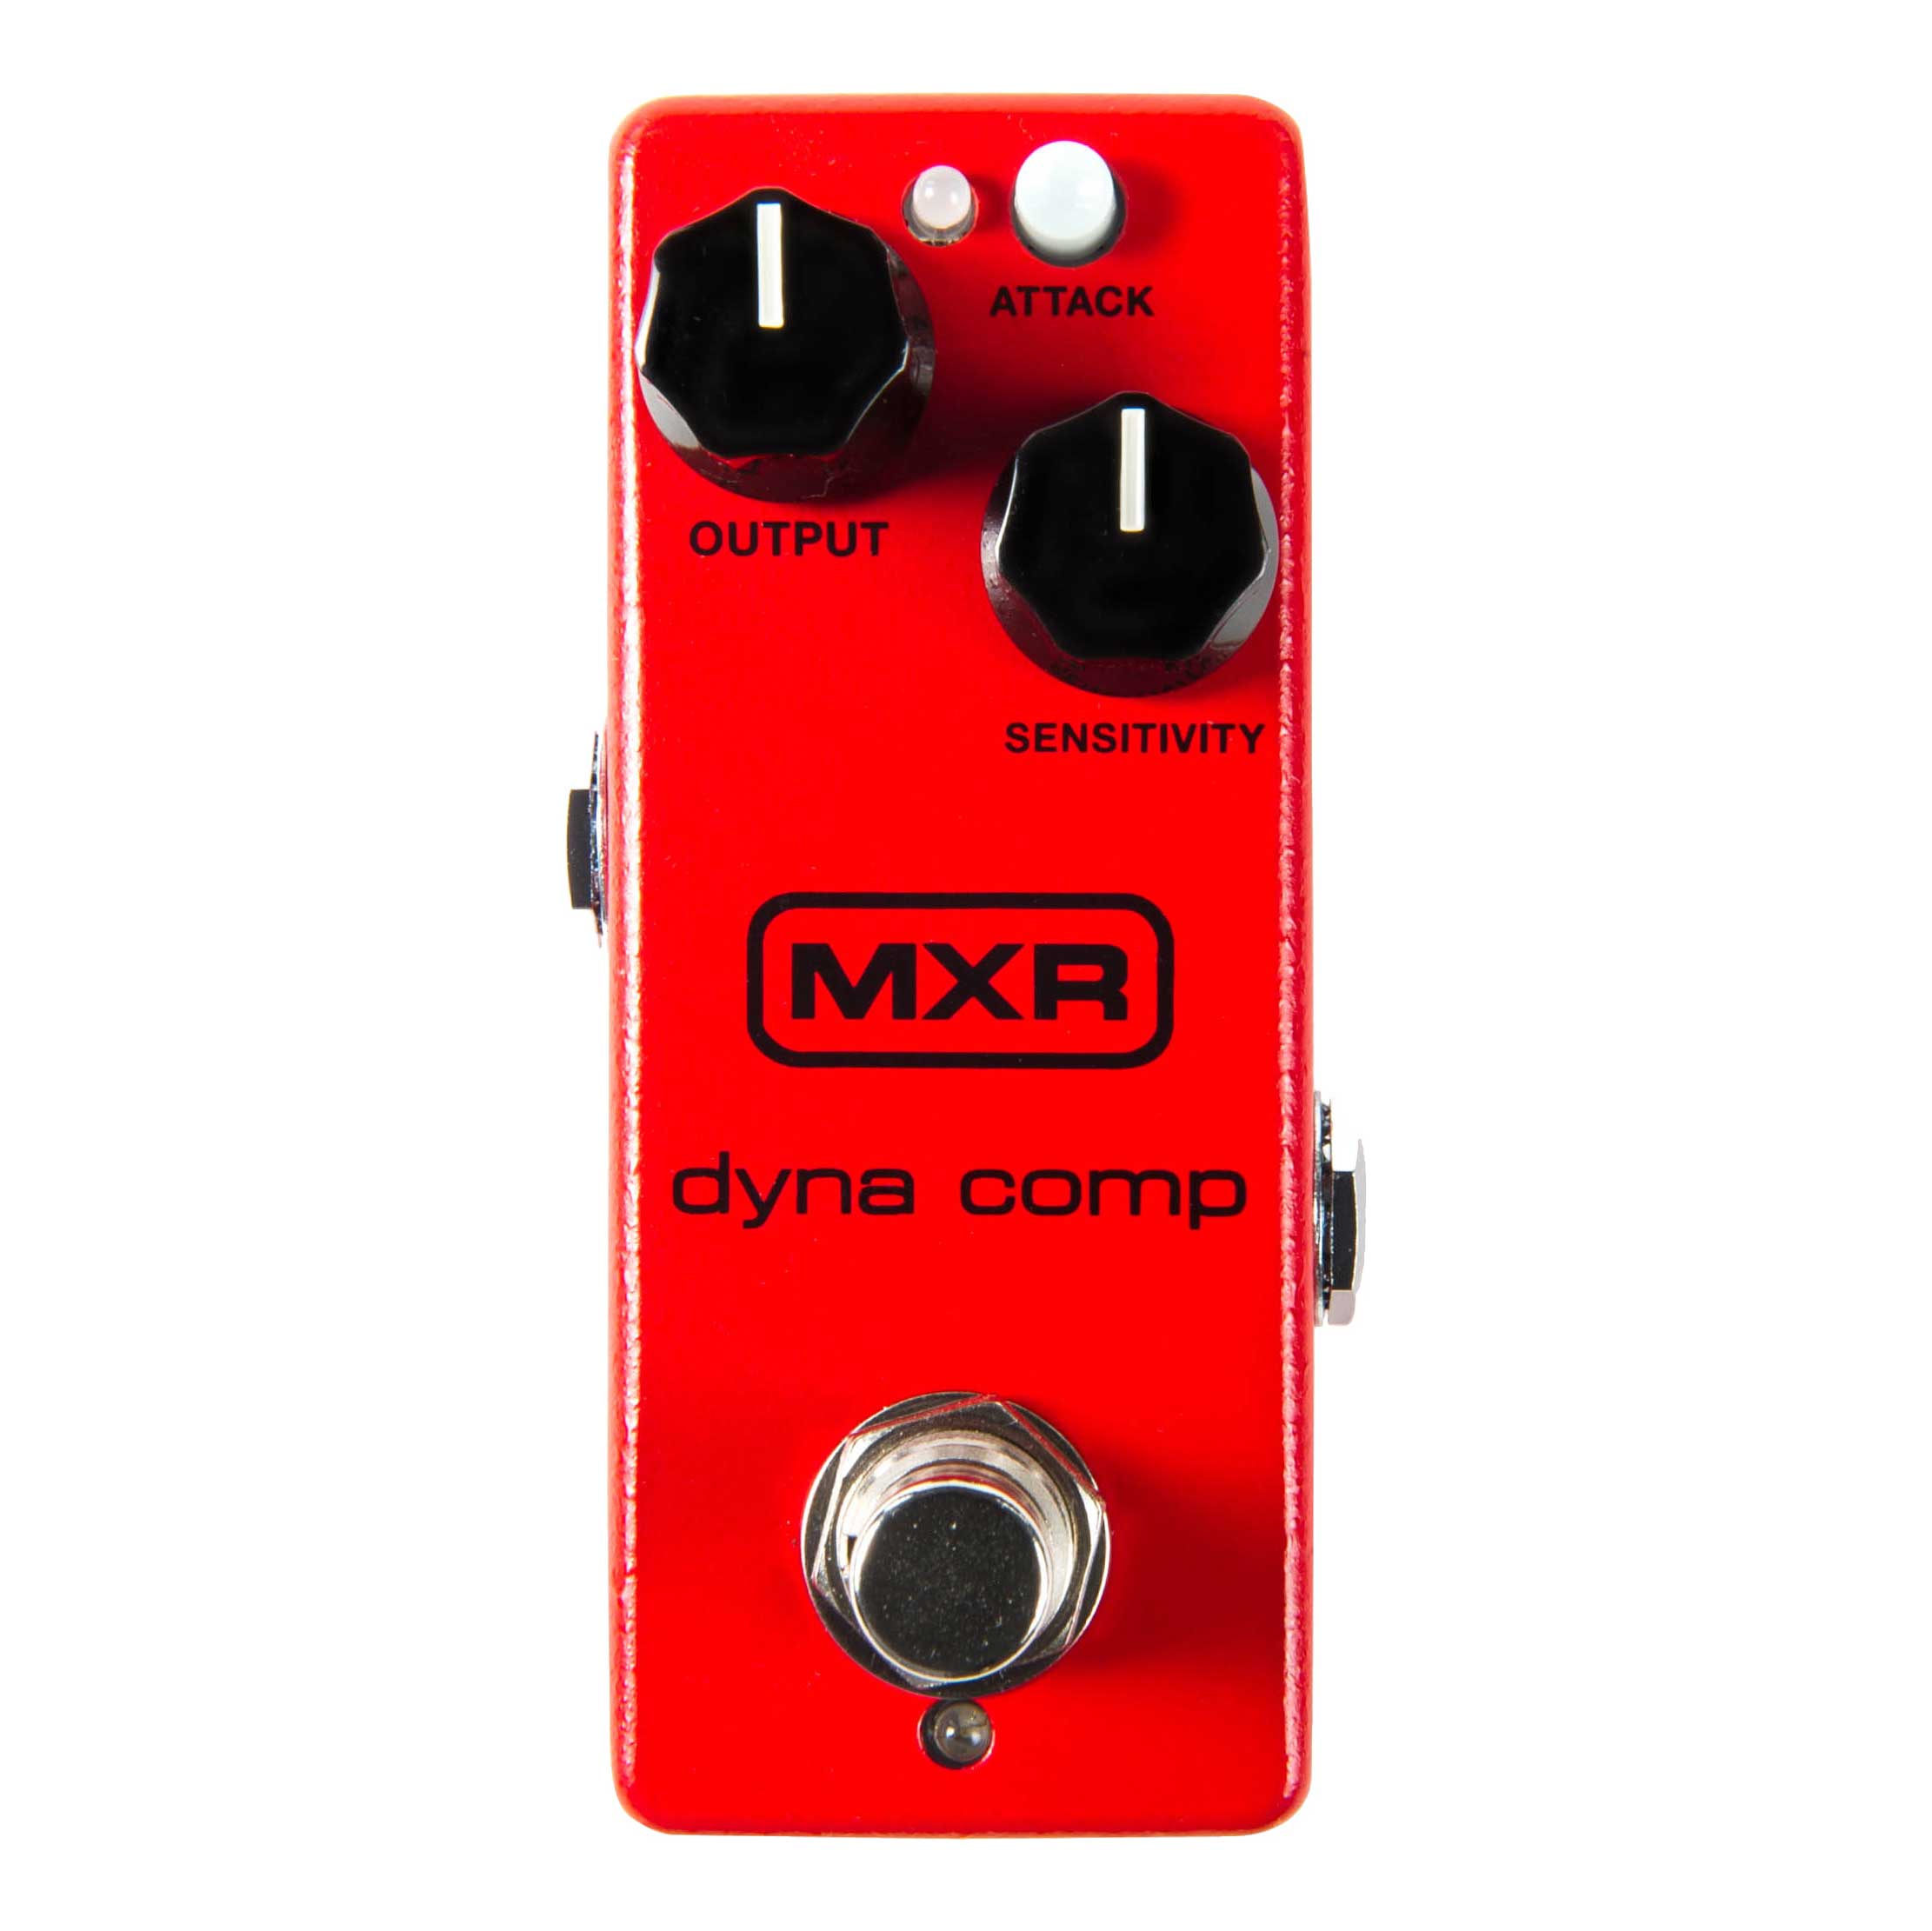 Dyna　Comp　MXR　guitarguitar　Mini　M291　Compressor　Pedal